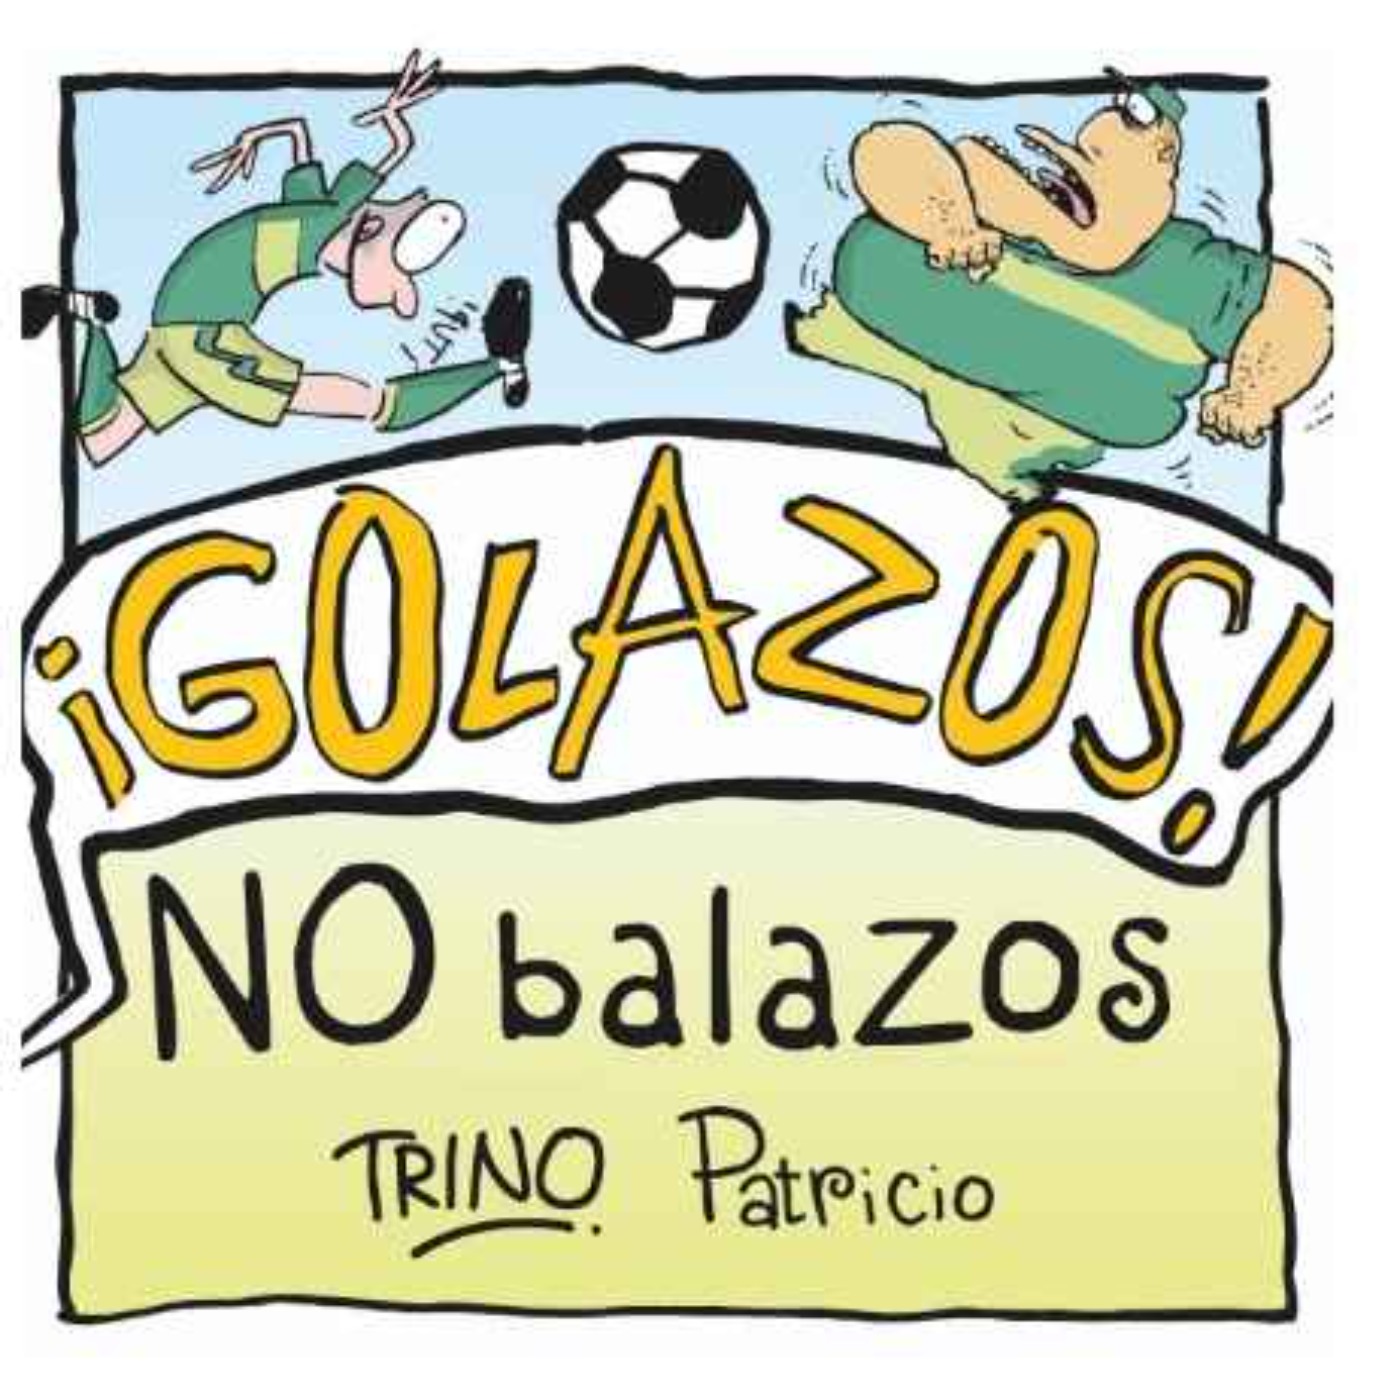 cover art for Trailer - ¡Golazos! No balazos